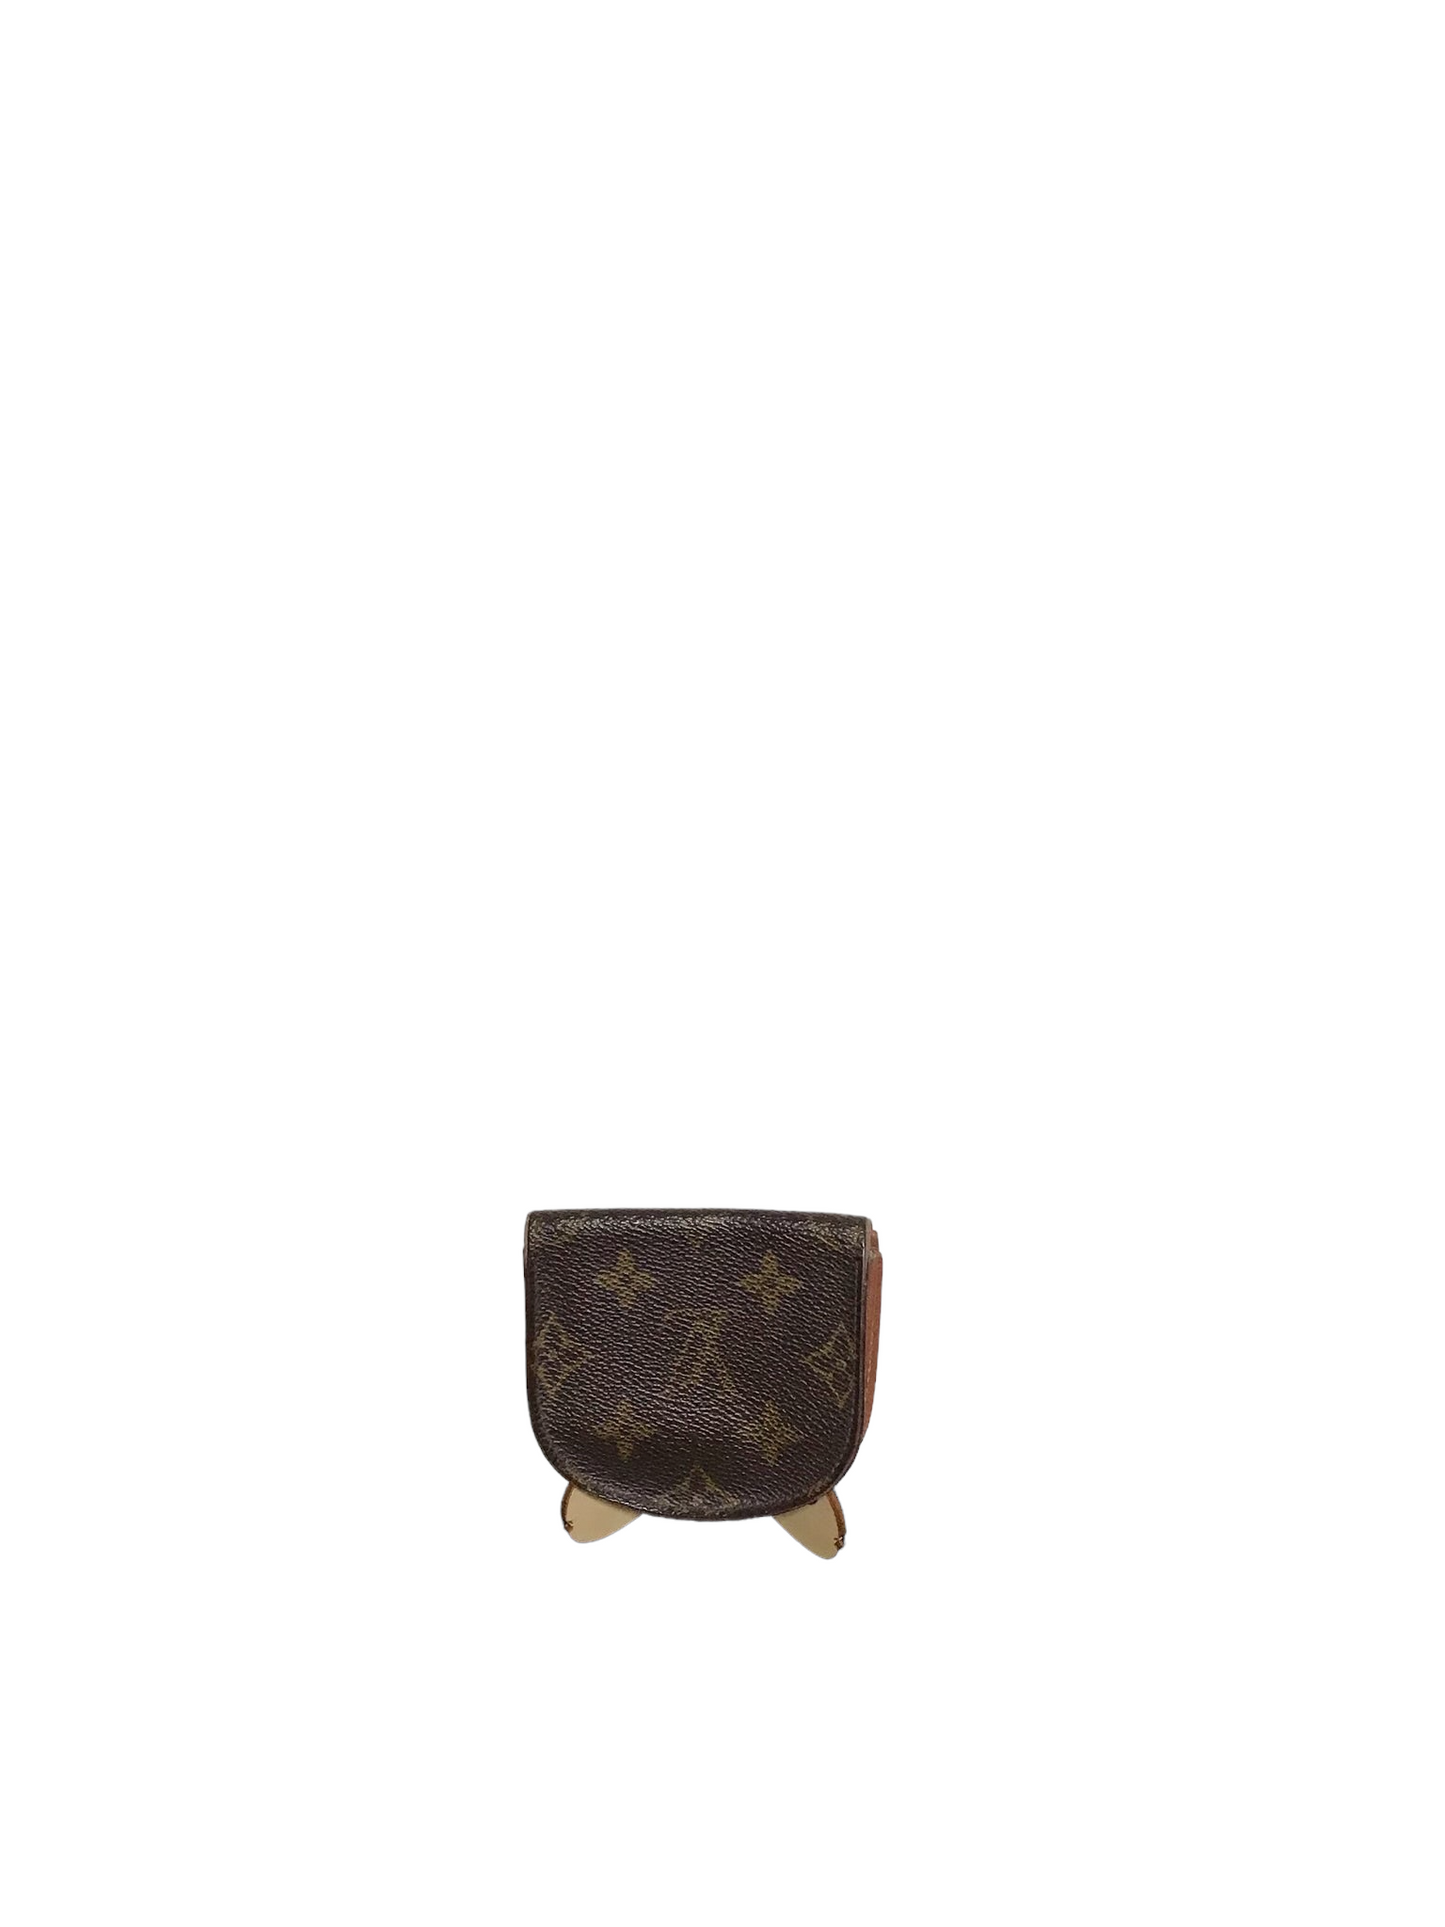 Louis Vuitton Monogram Canvas Coin Purse